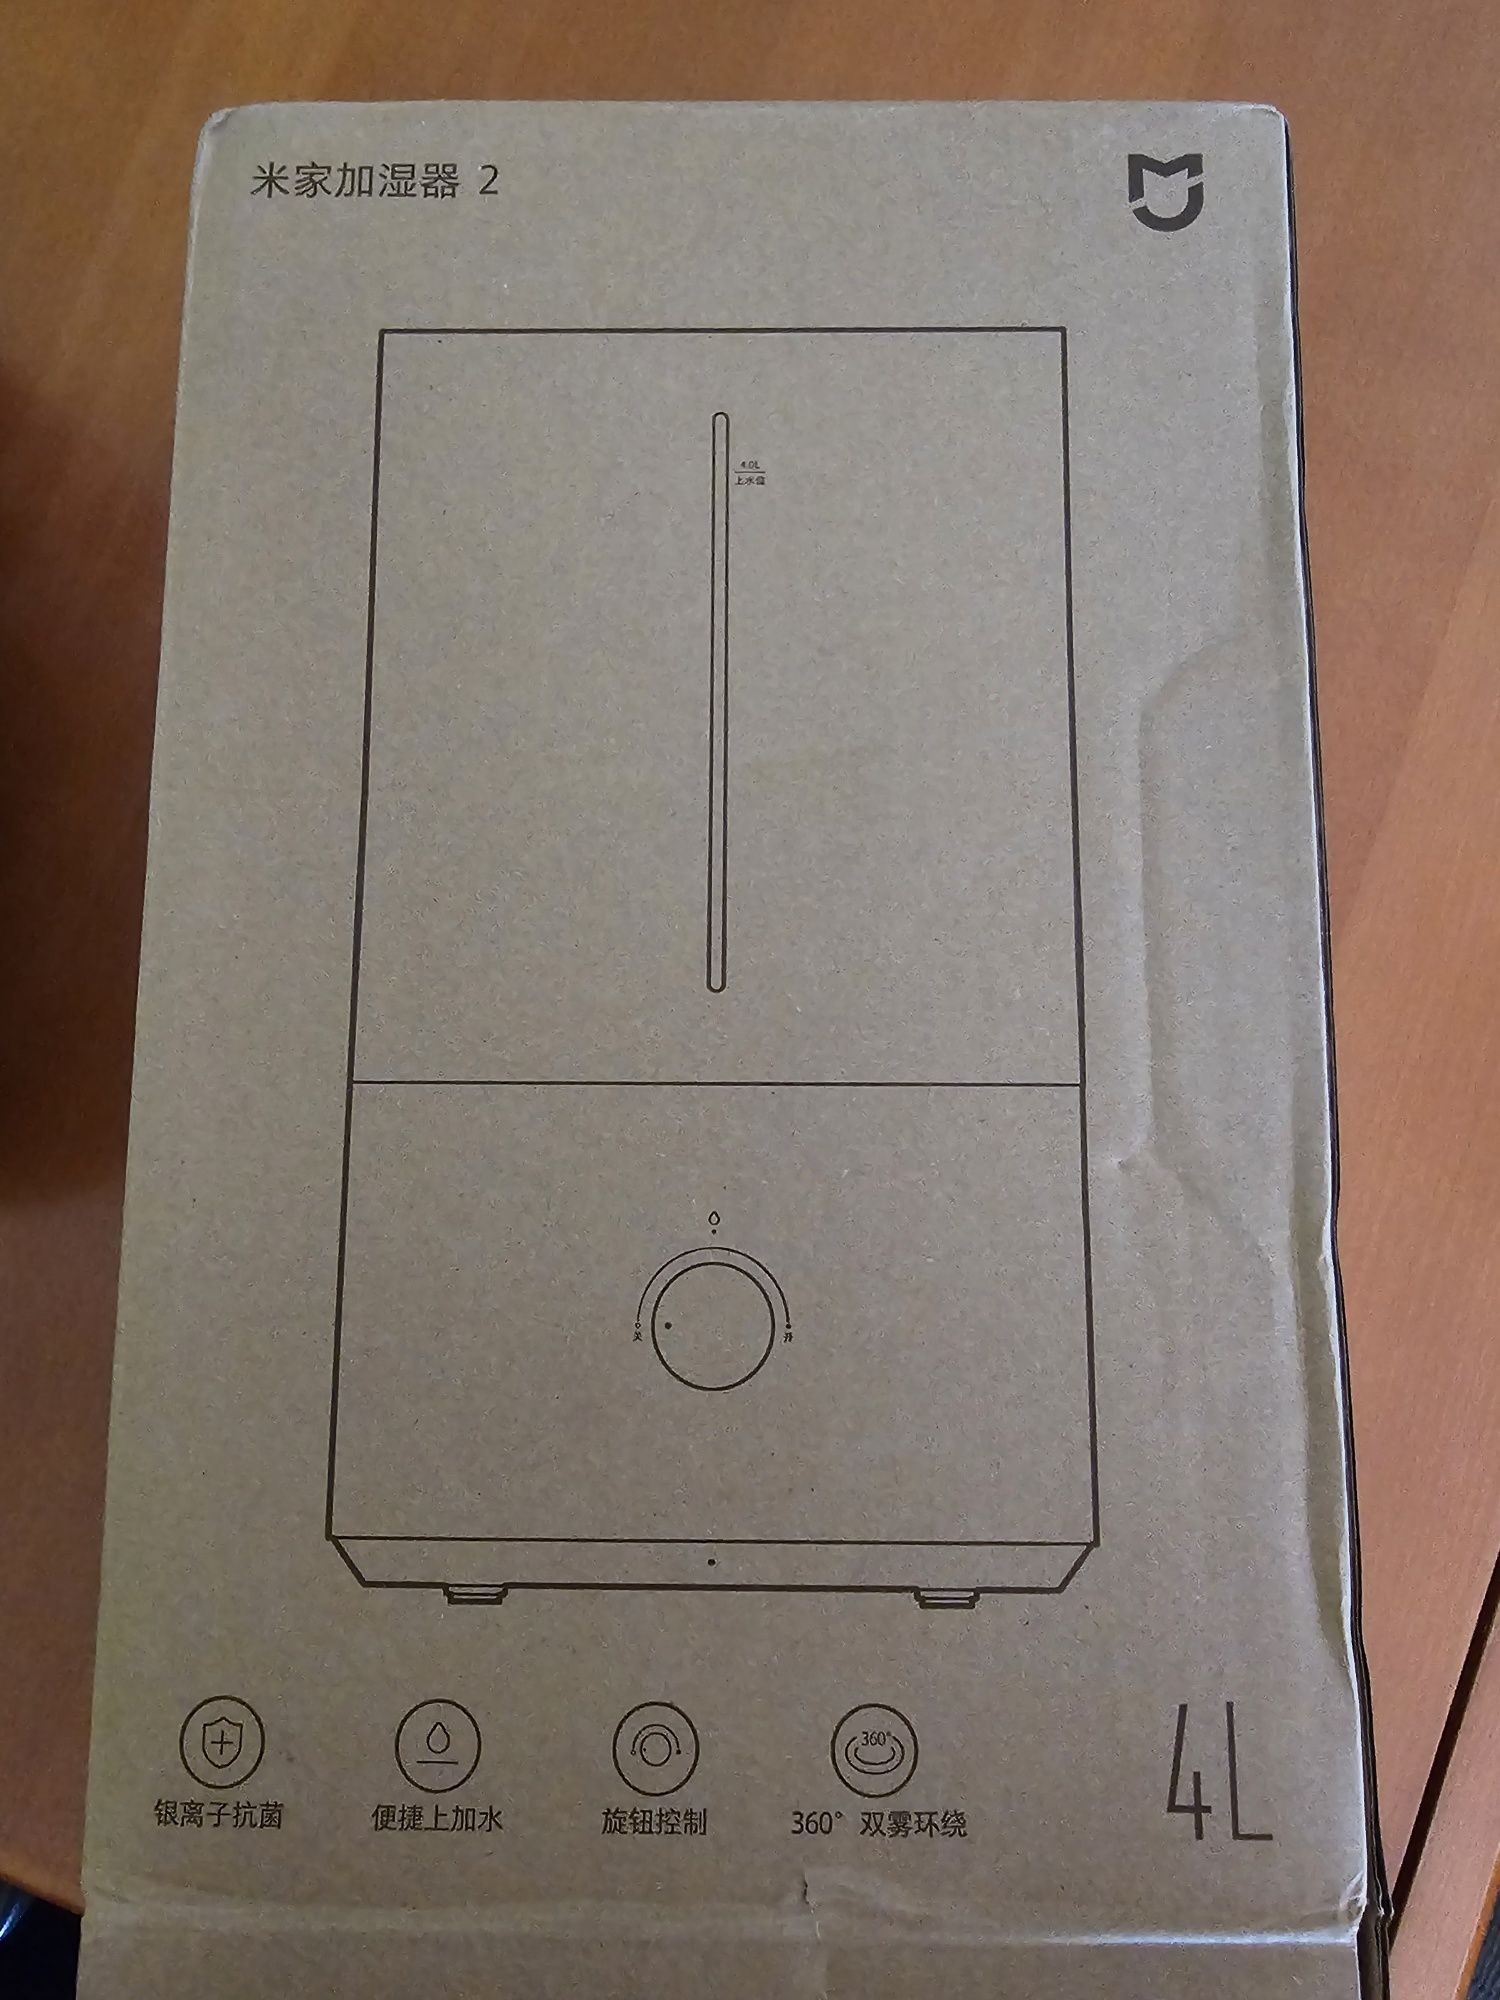 Humidificador Xiaomi 4L - NOVO!!!